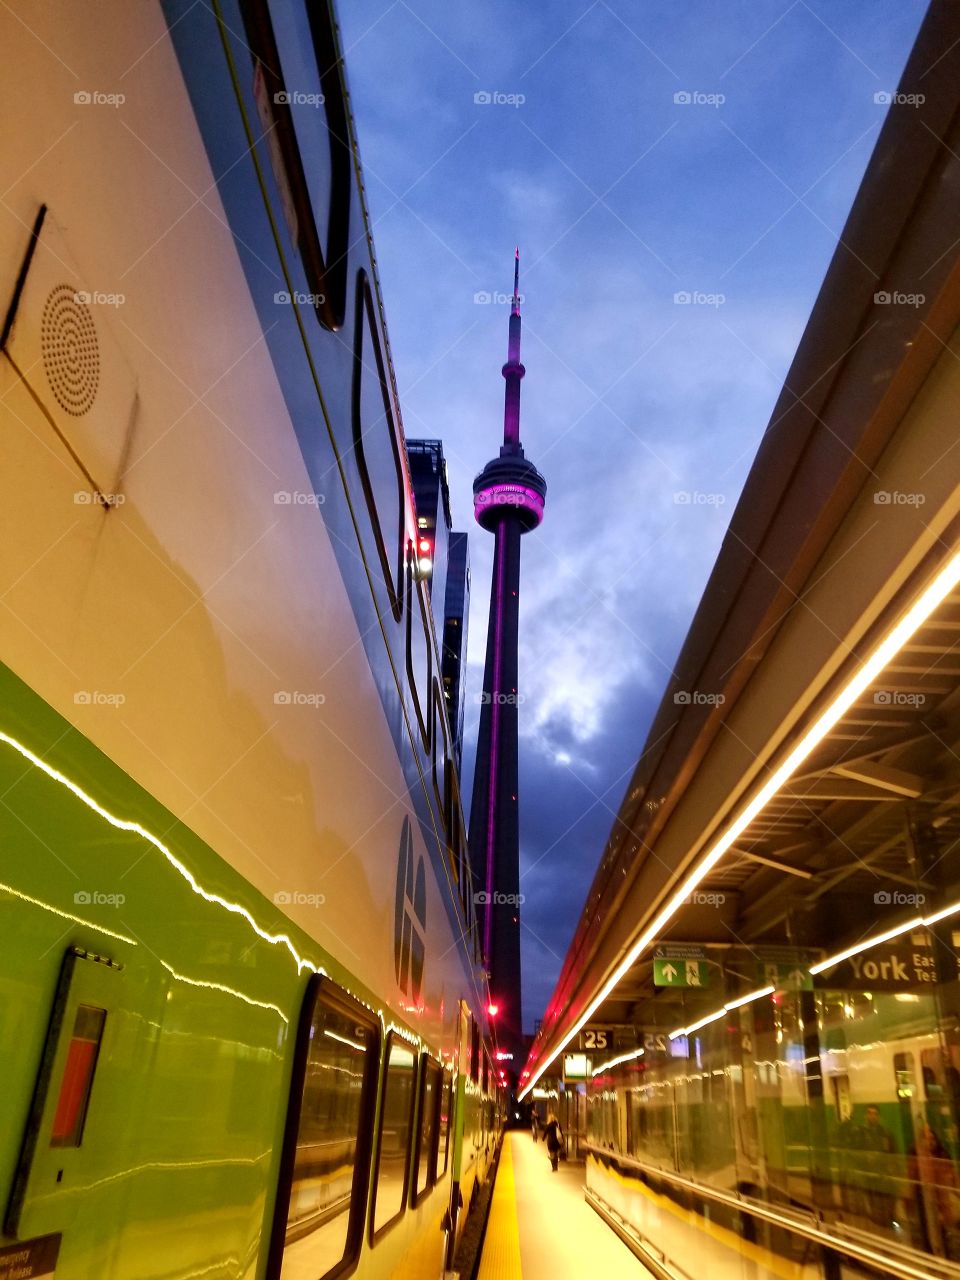 Late night travels in Toronto 
At Union Go Station

Lakeshore East Go train to Oshawa Go train Station